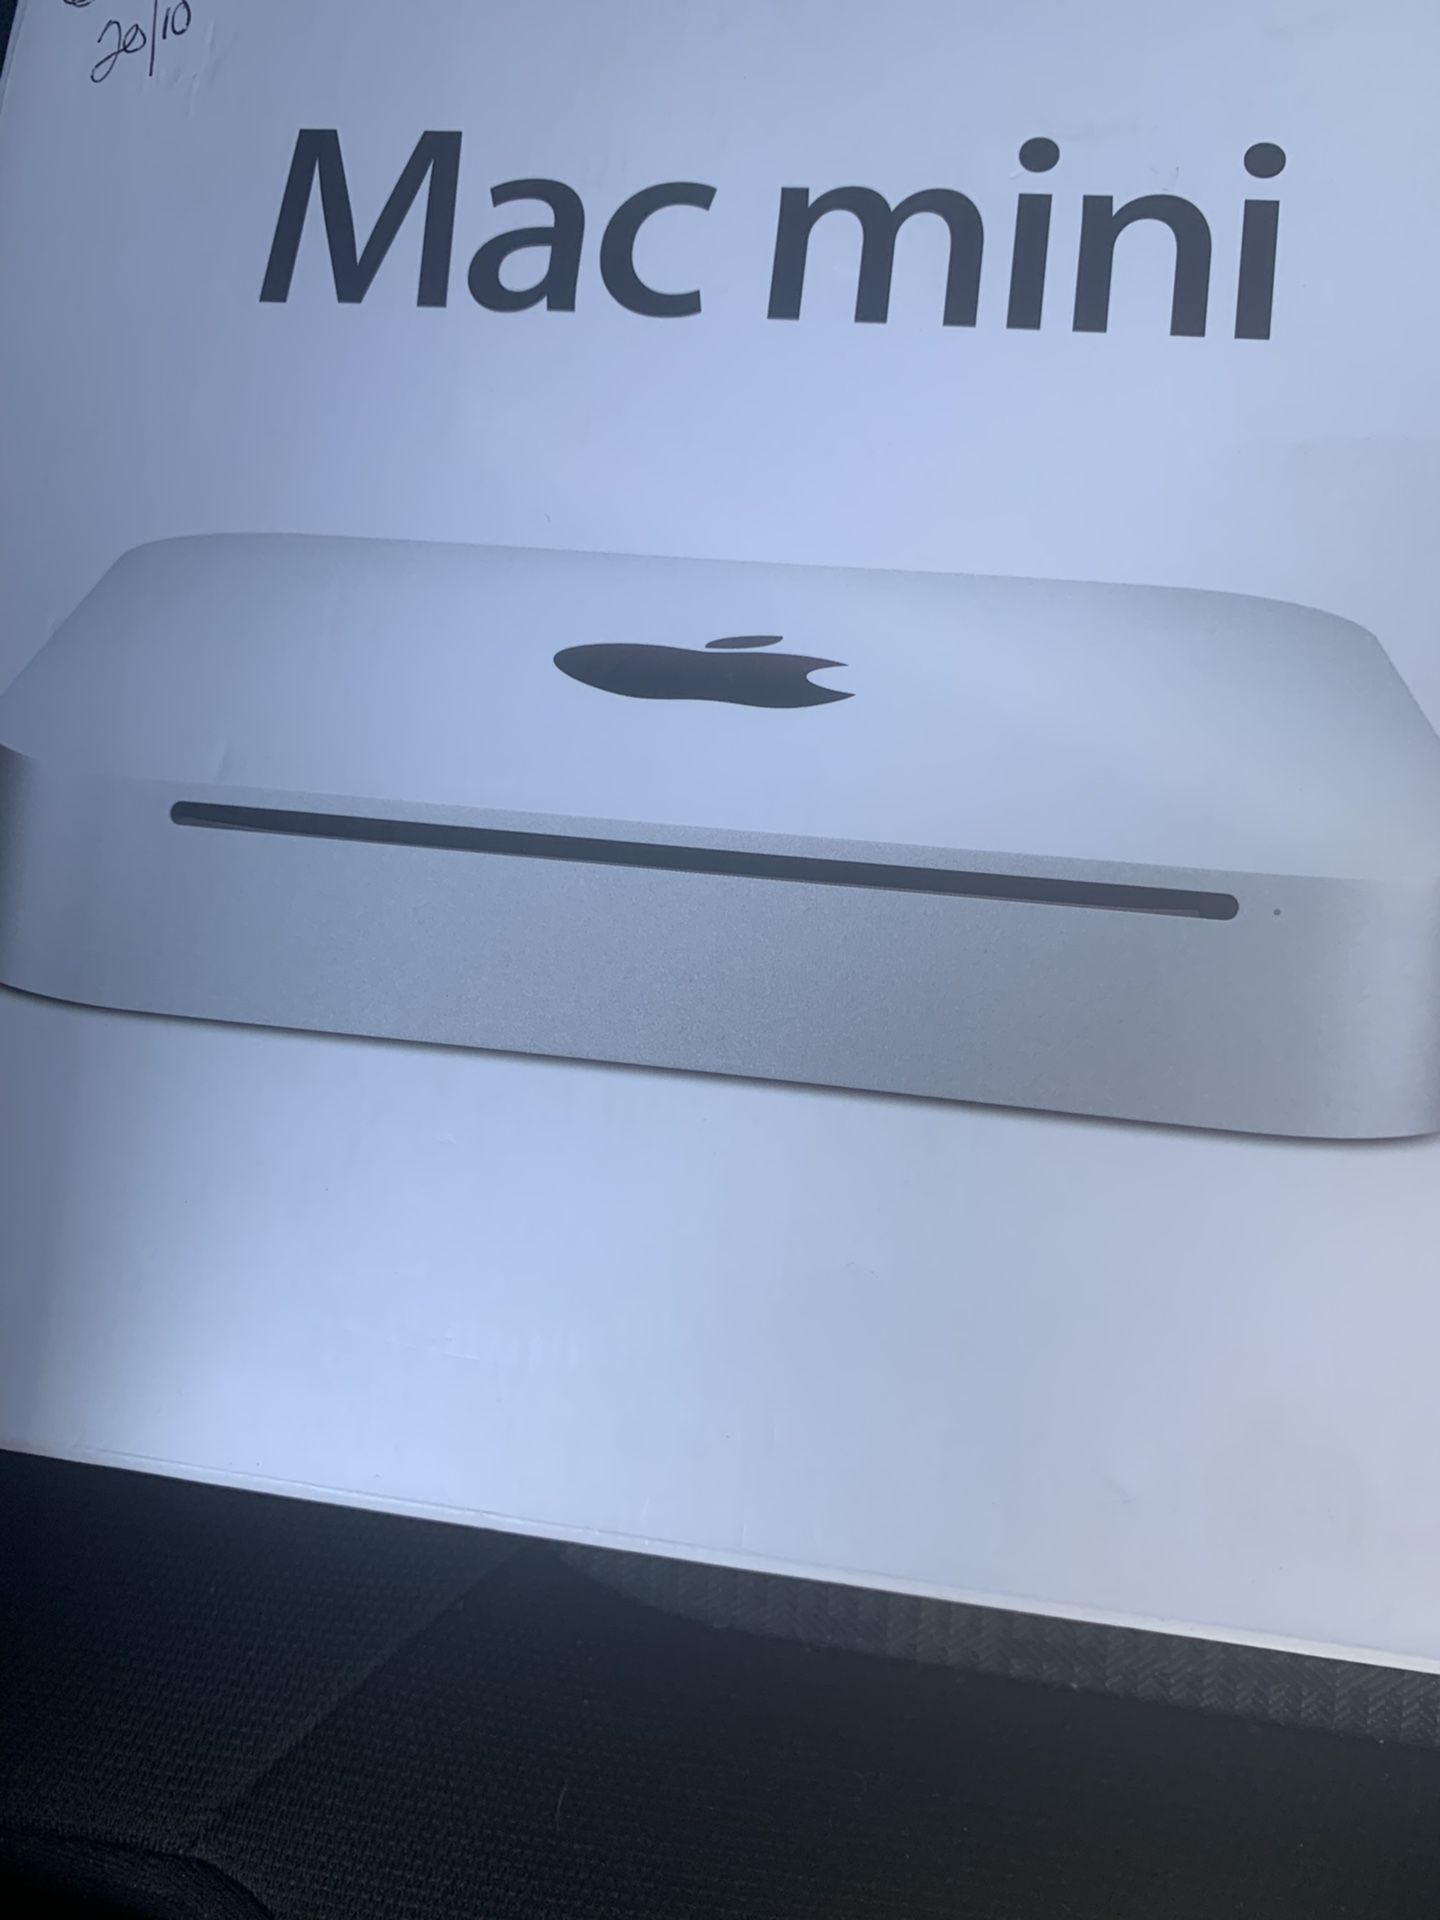 Apple Mac mini and a blue tooth keyboard